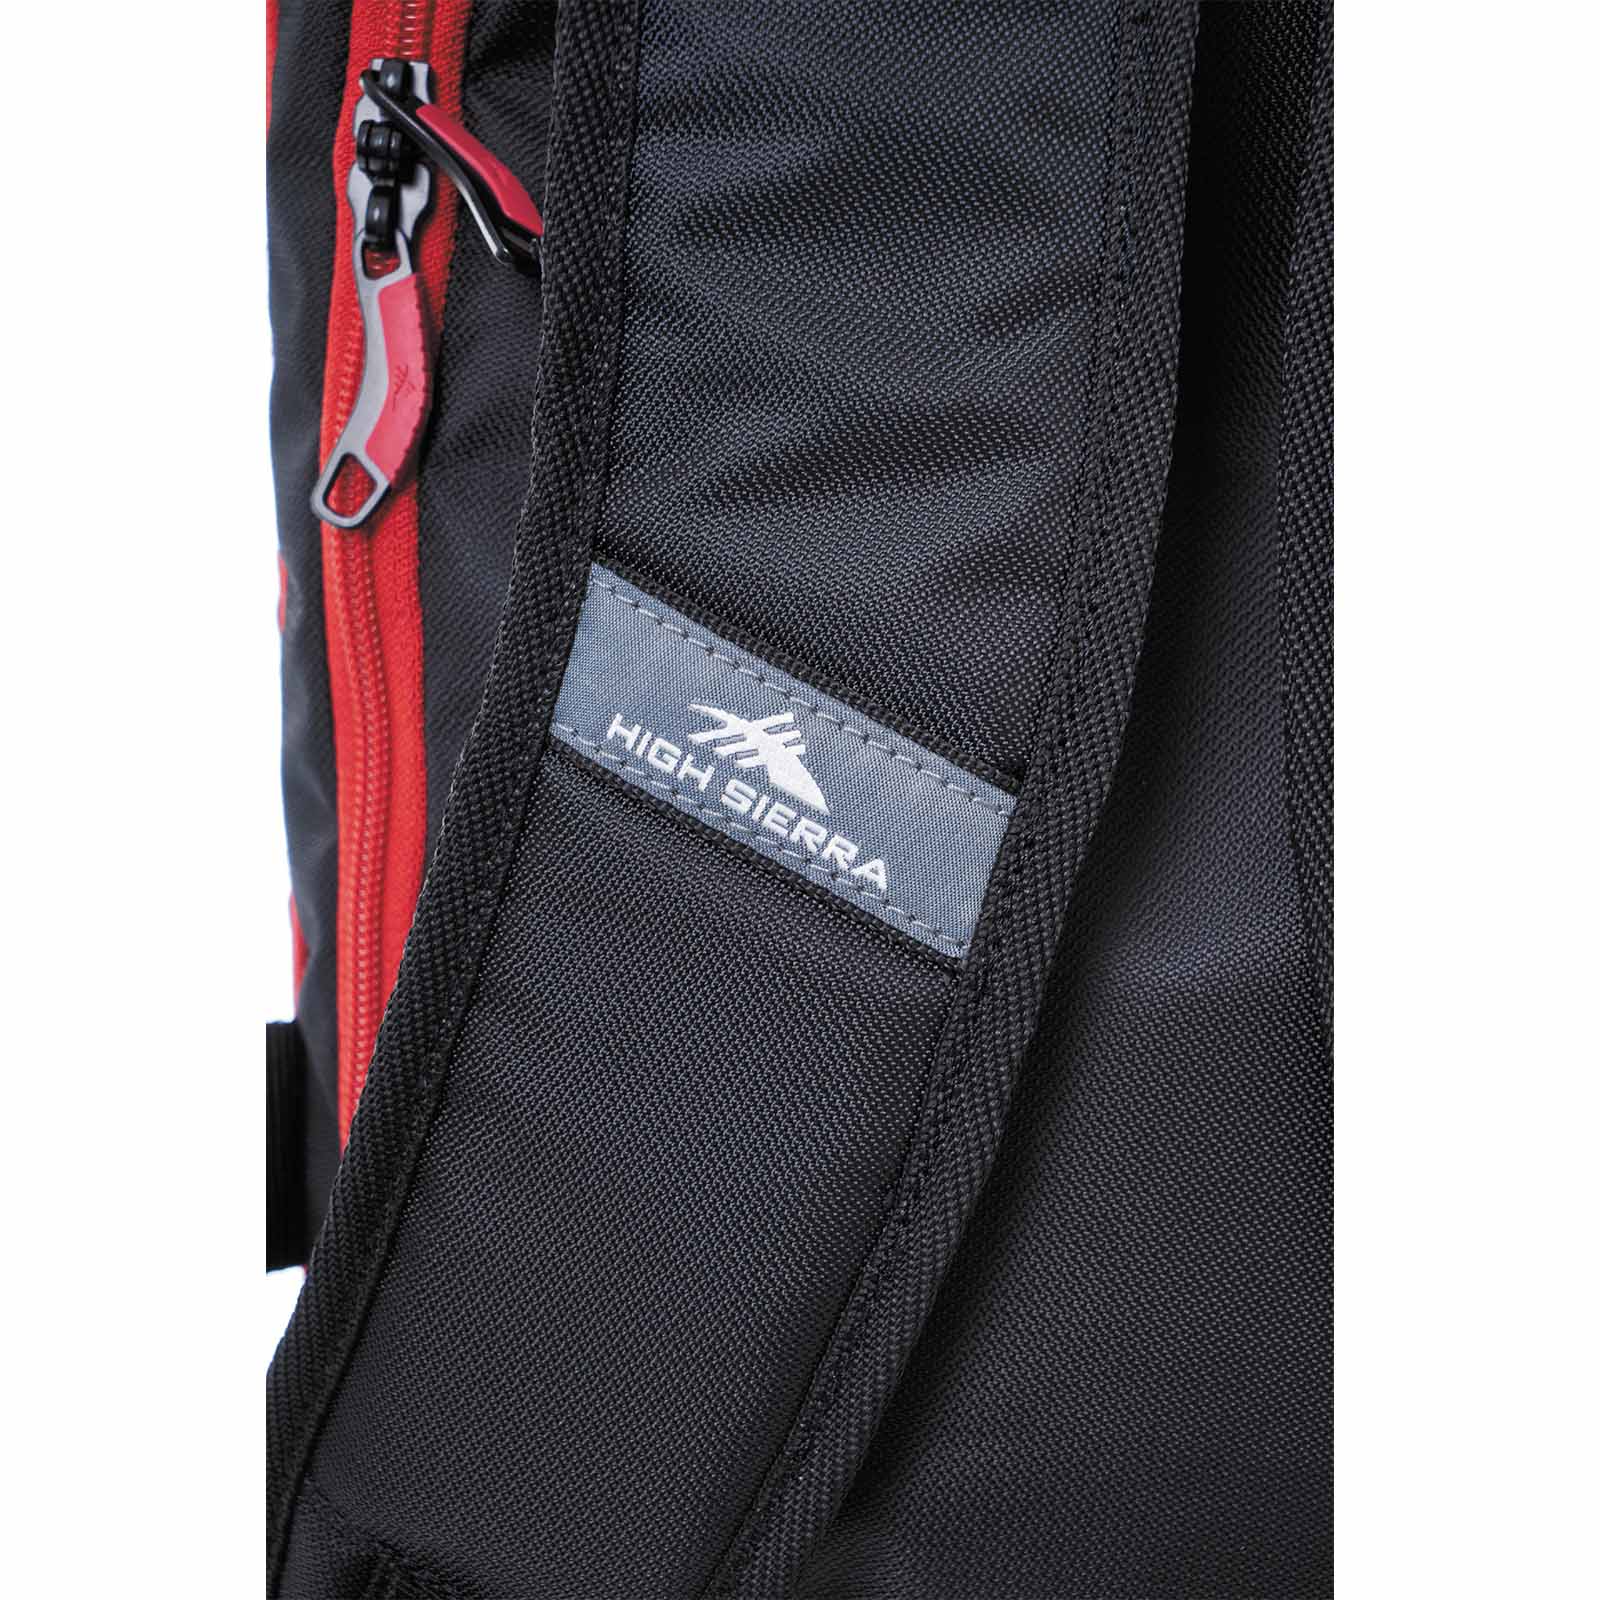    high-sierra-composite-2-in-1-duffel-black-harness